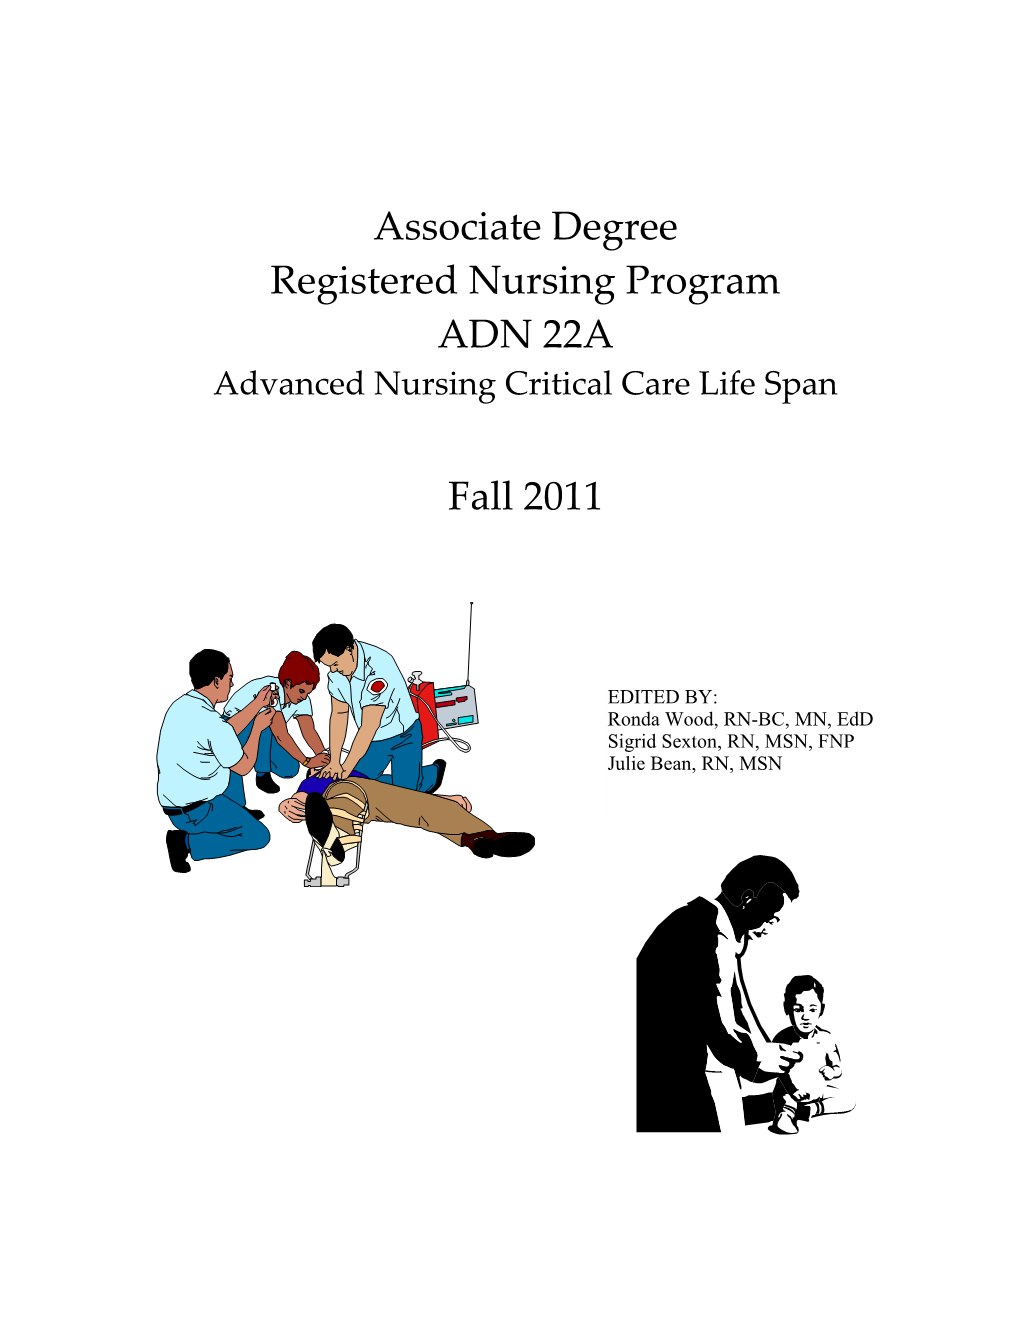 Advanced Nursing Critical Care Life Span